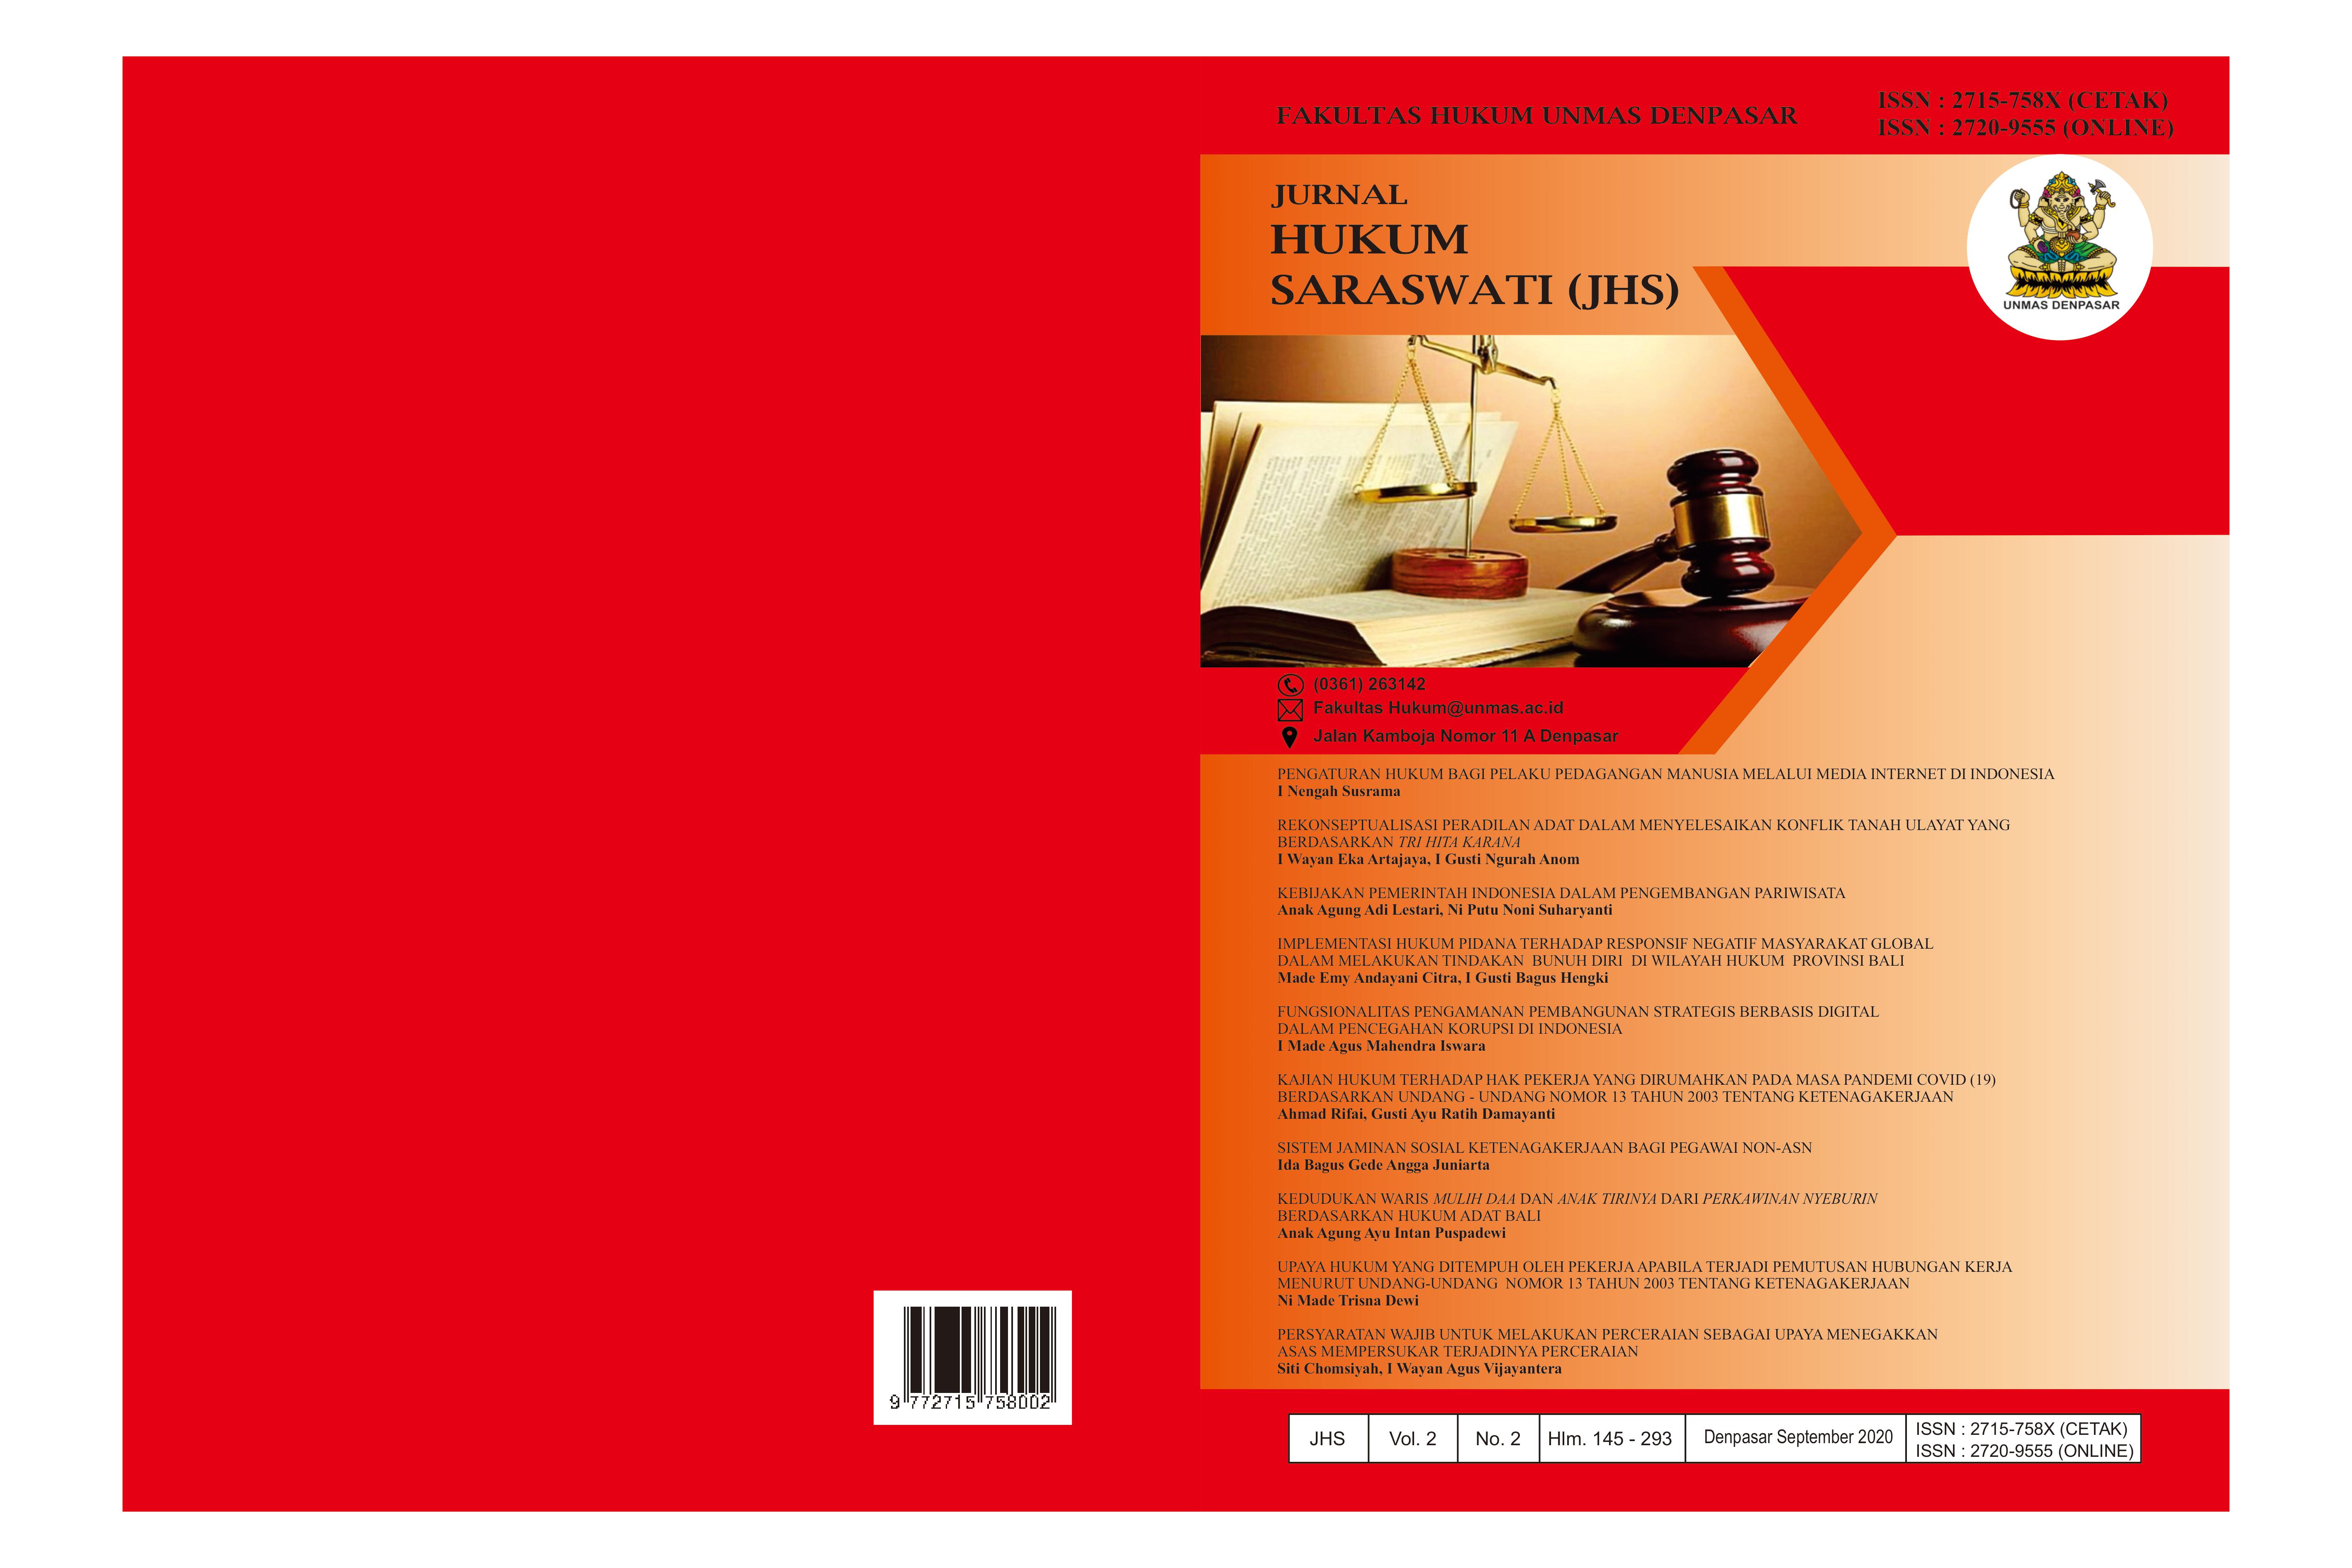 					View Vol. 2 No. 2 (2020): Jurnal Hukum Saraswati
				